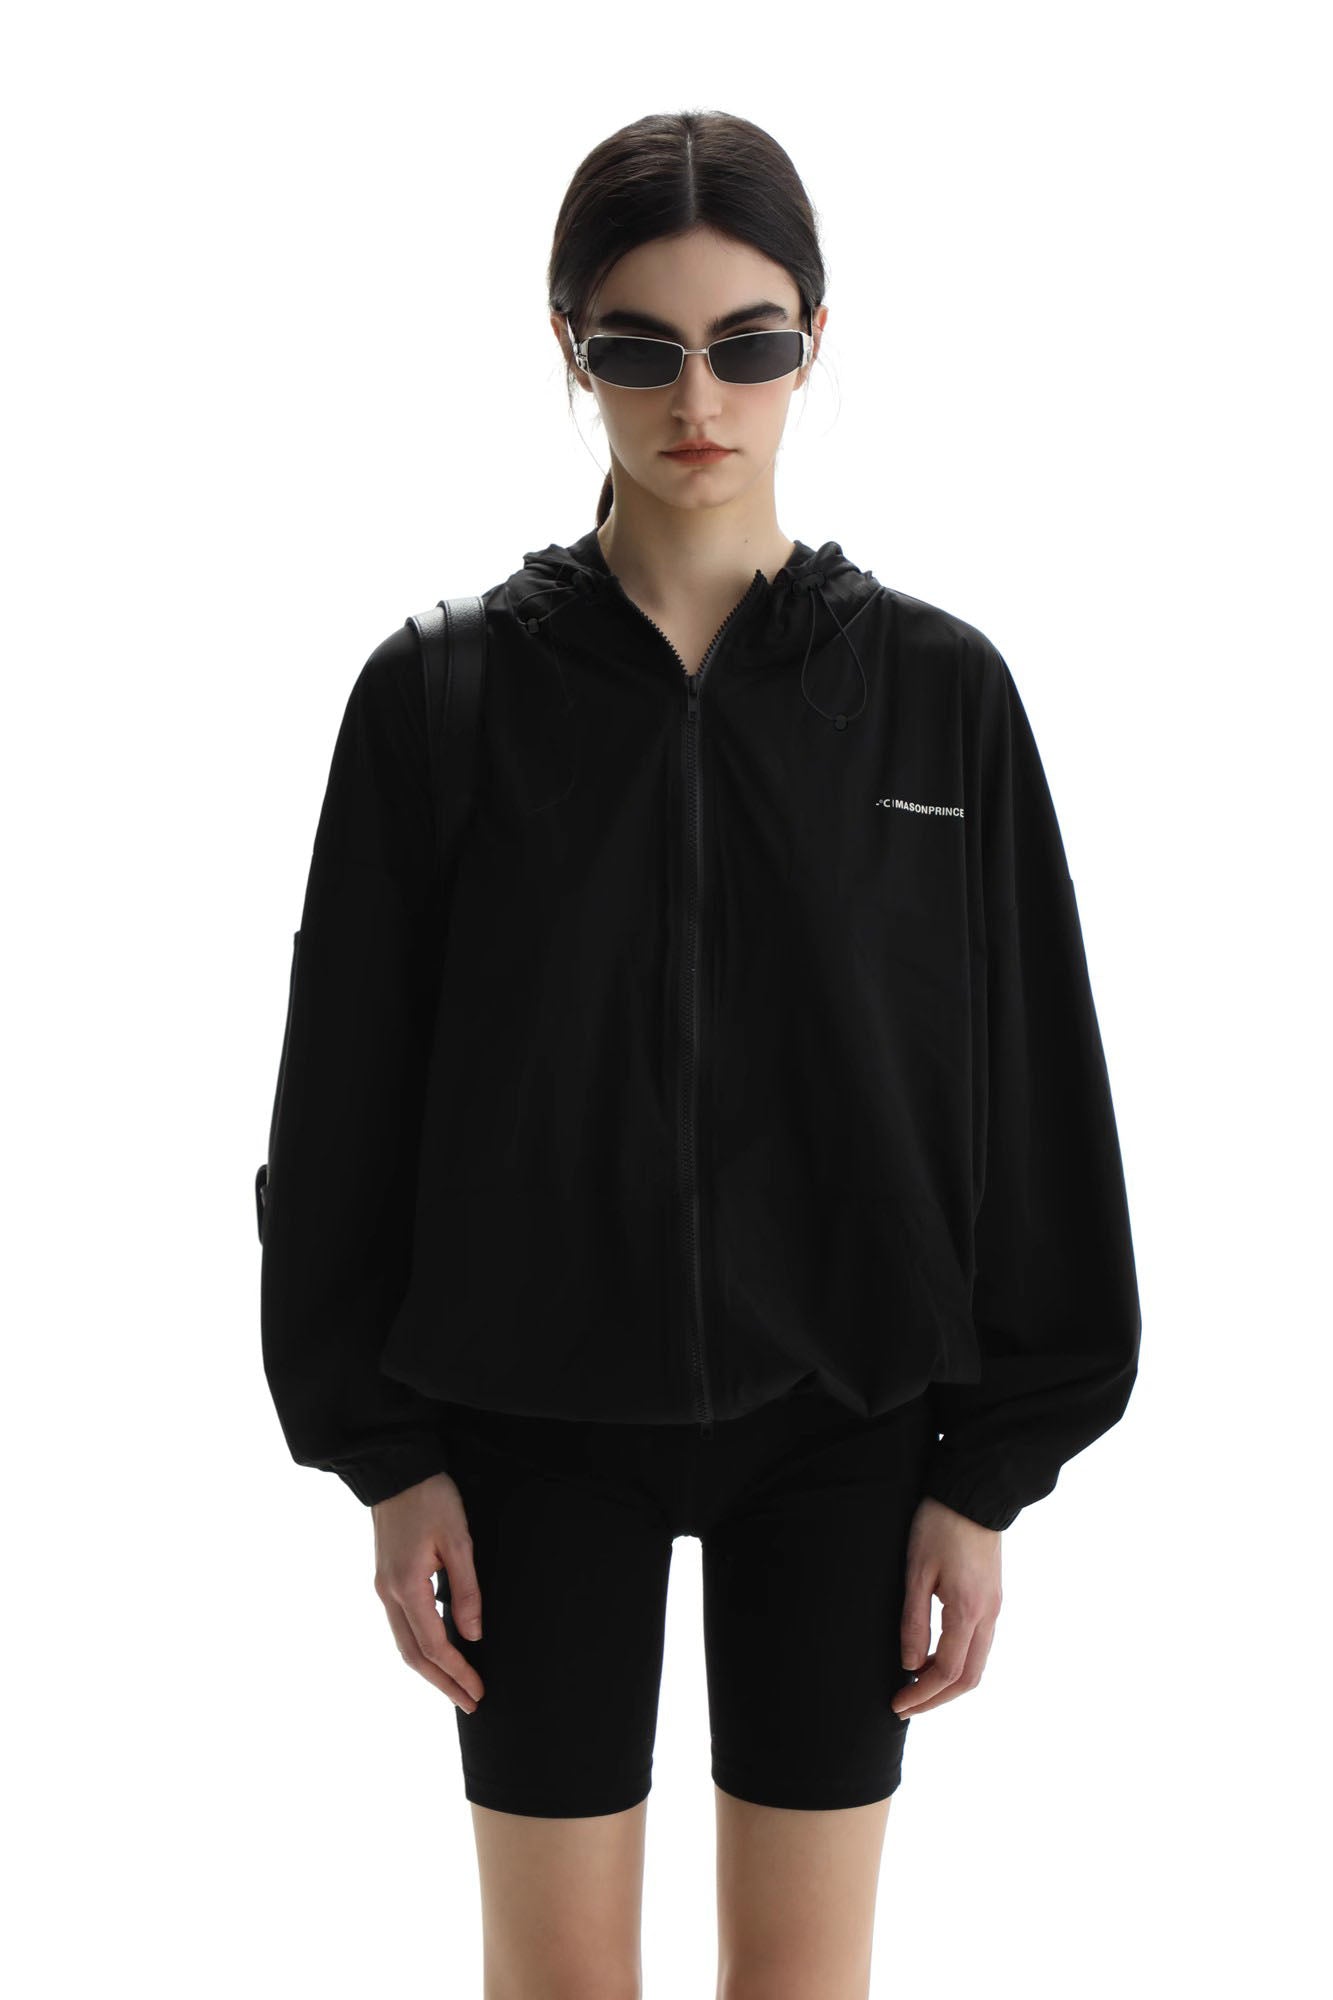 Ruched Hem Hooded Jacket Korean Street Fashion Jacket By Mason Prince Shop Online at OH Vault